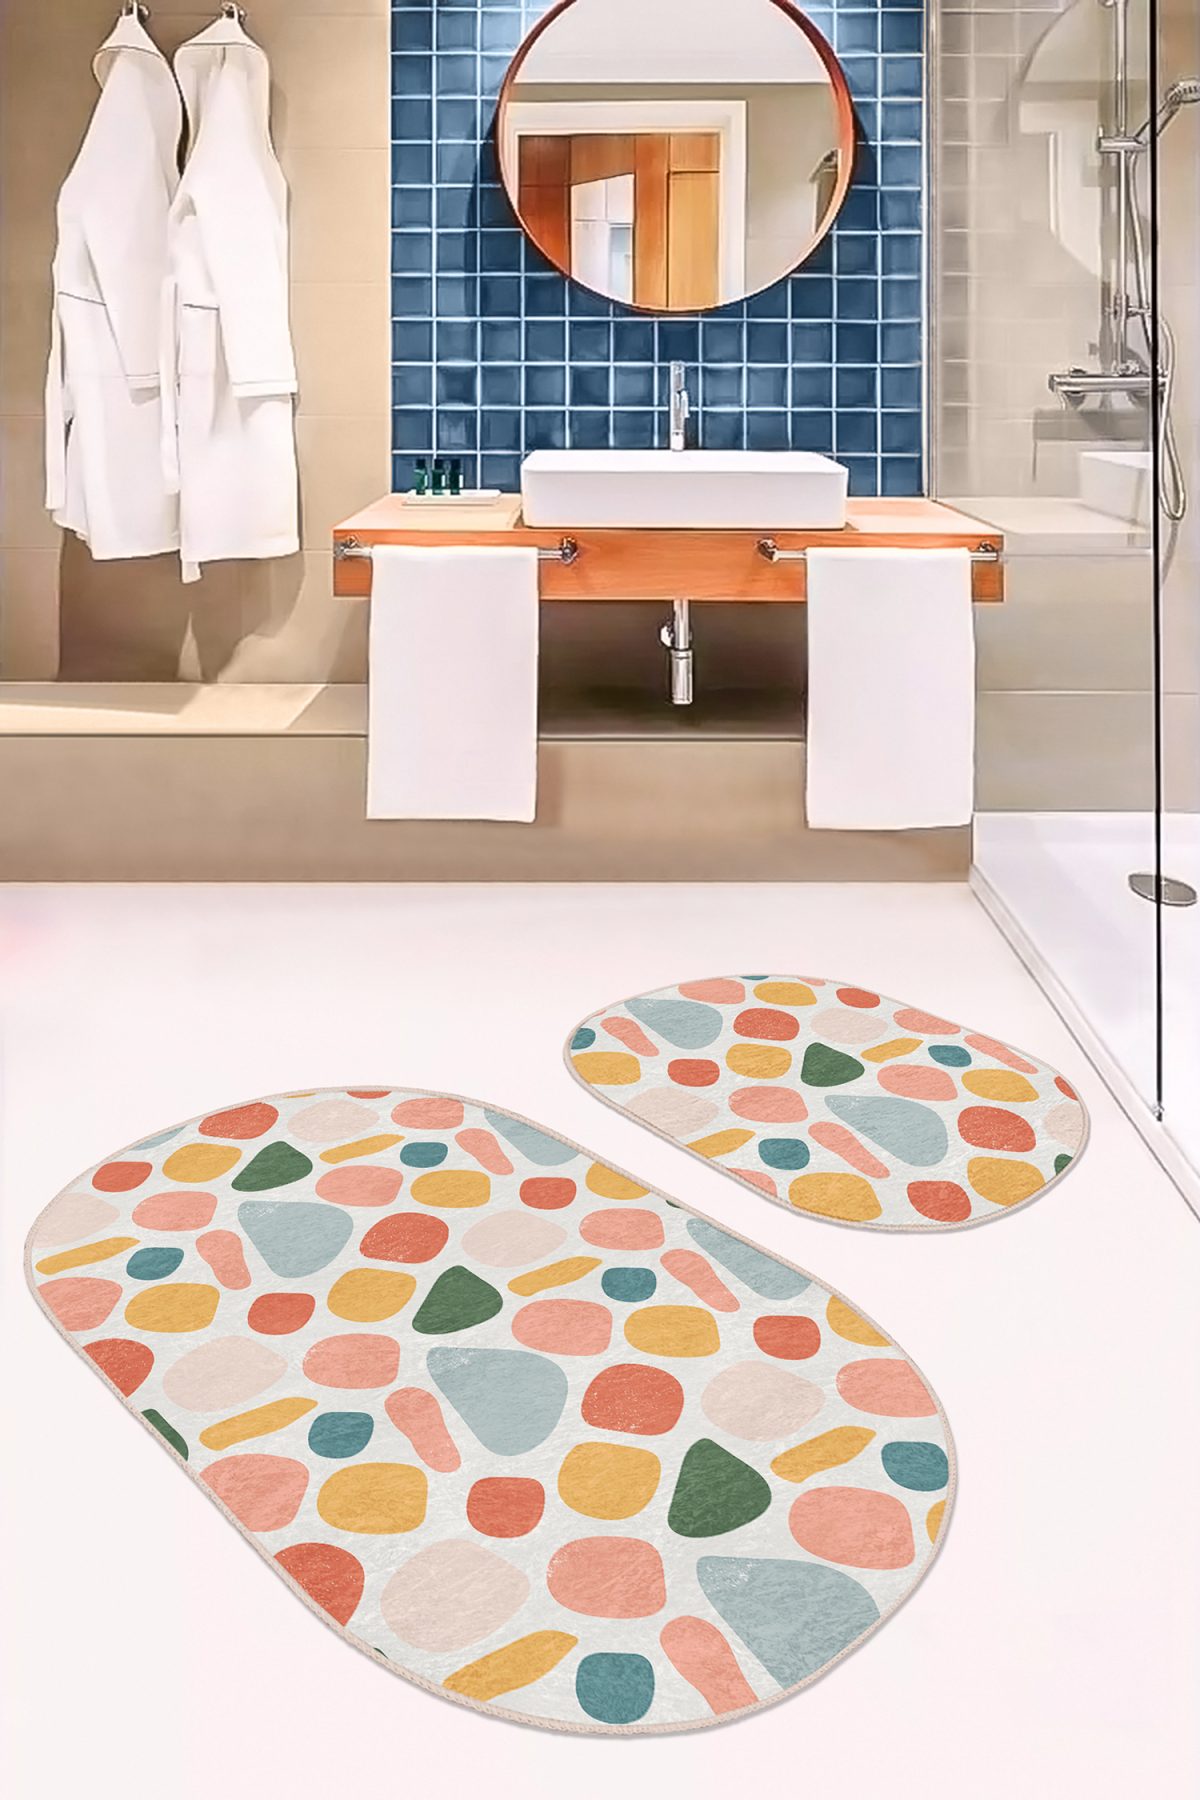 Renkli Oval Çizimli Dijital Baskılı 2'li Oval Kaymaz Tabanlı Banyo & Mutfak Paspas Takımı Realhomes